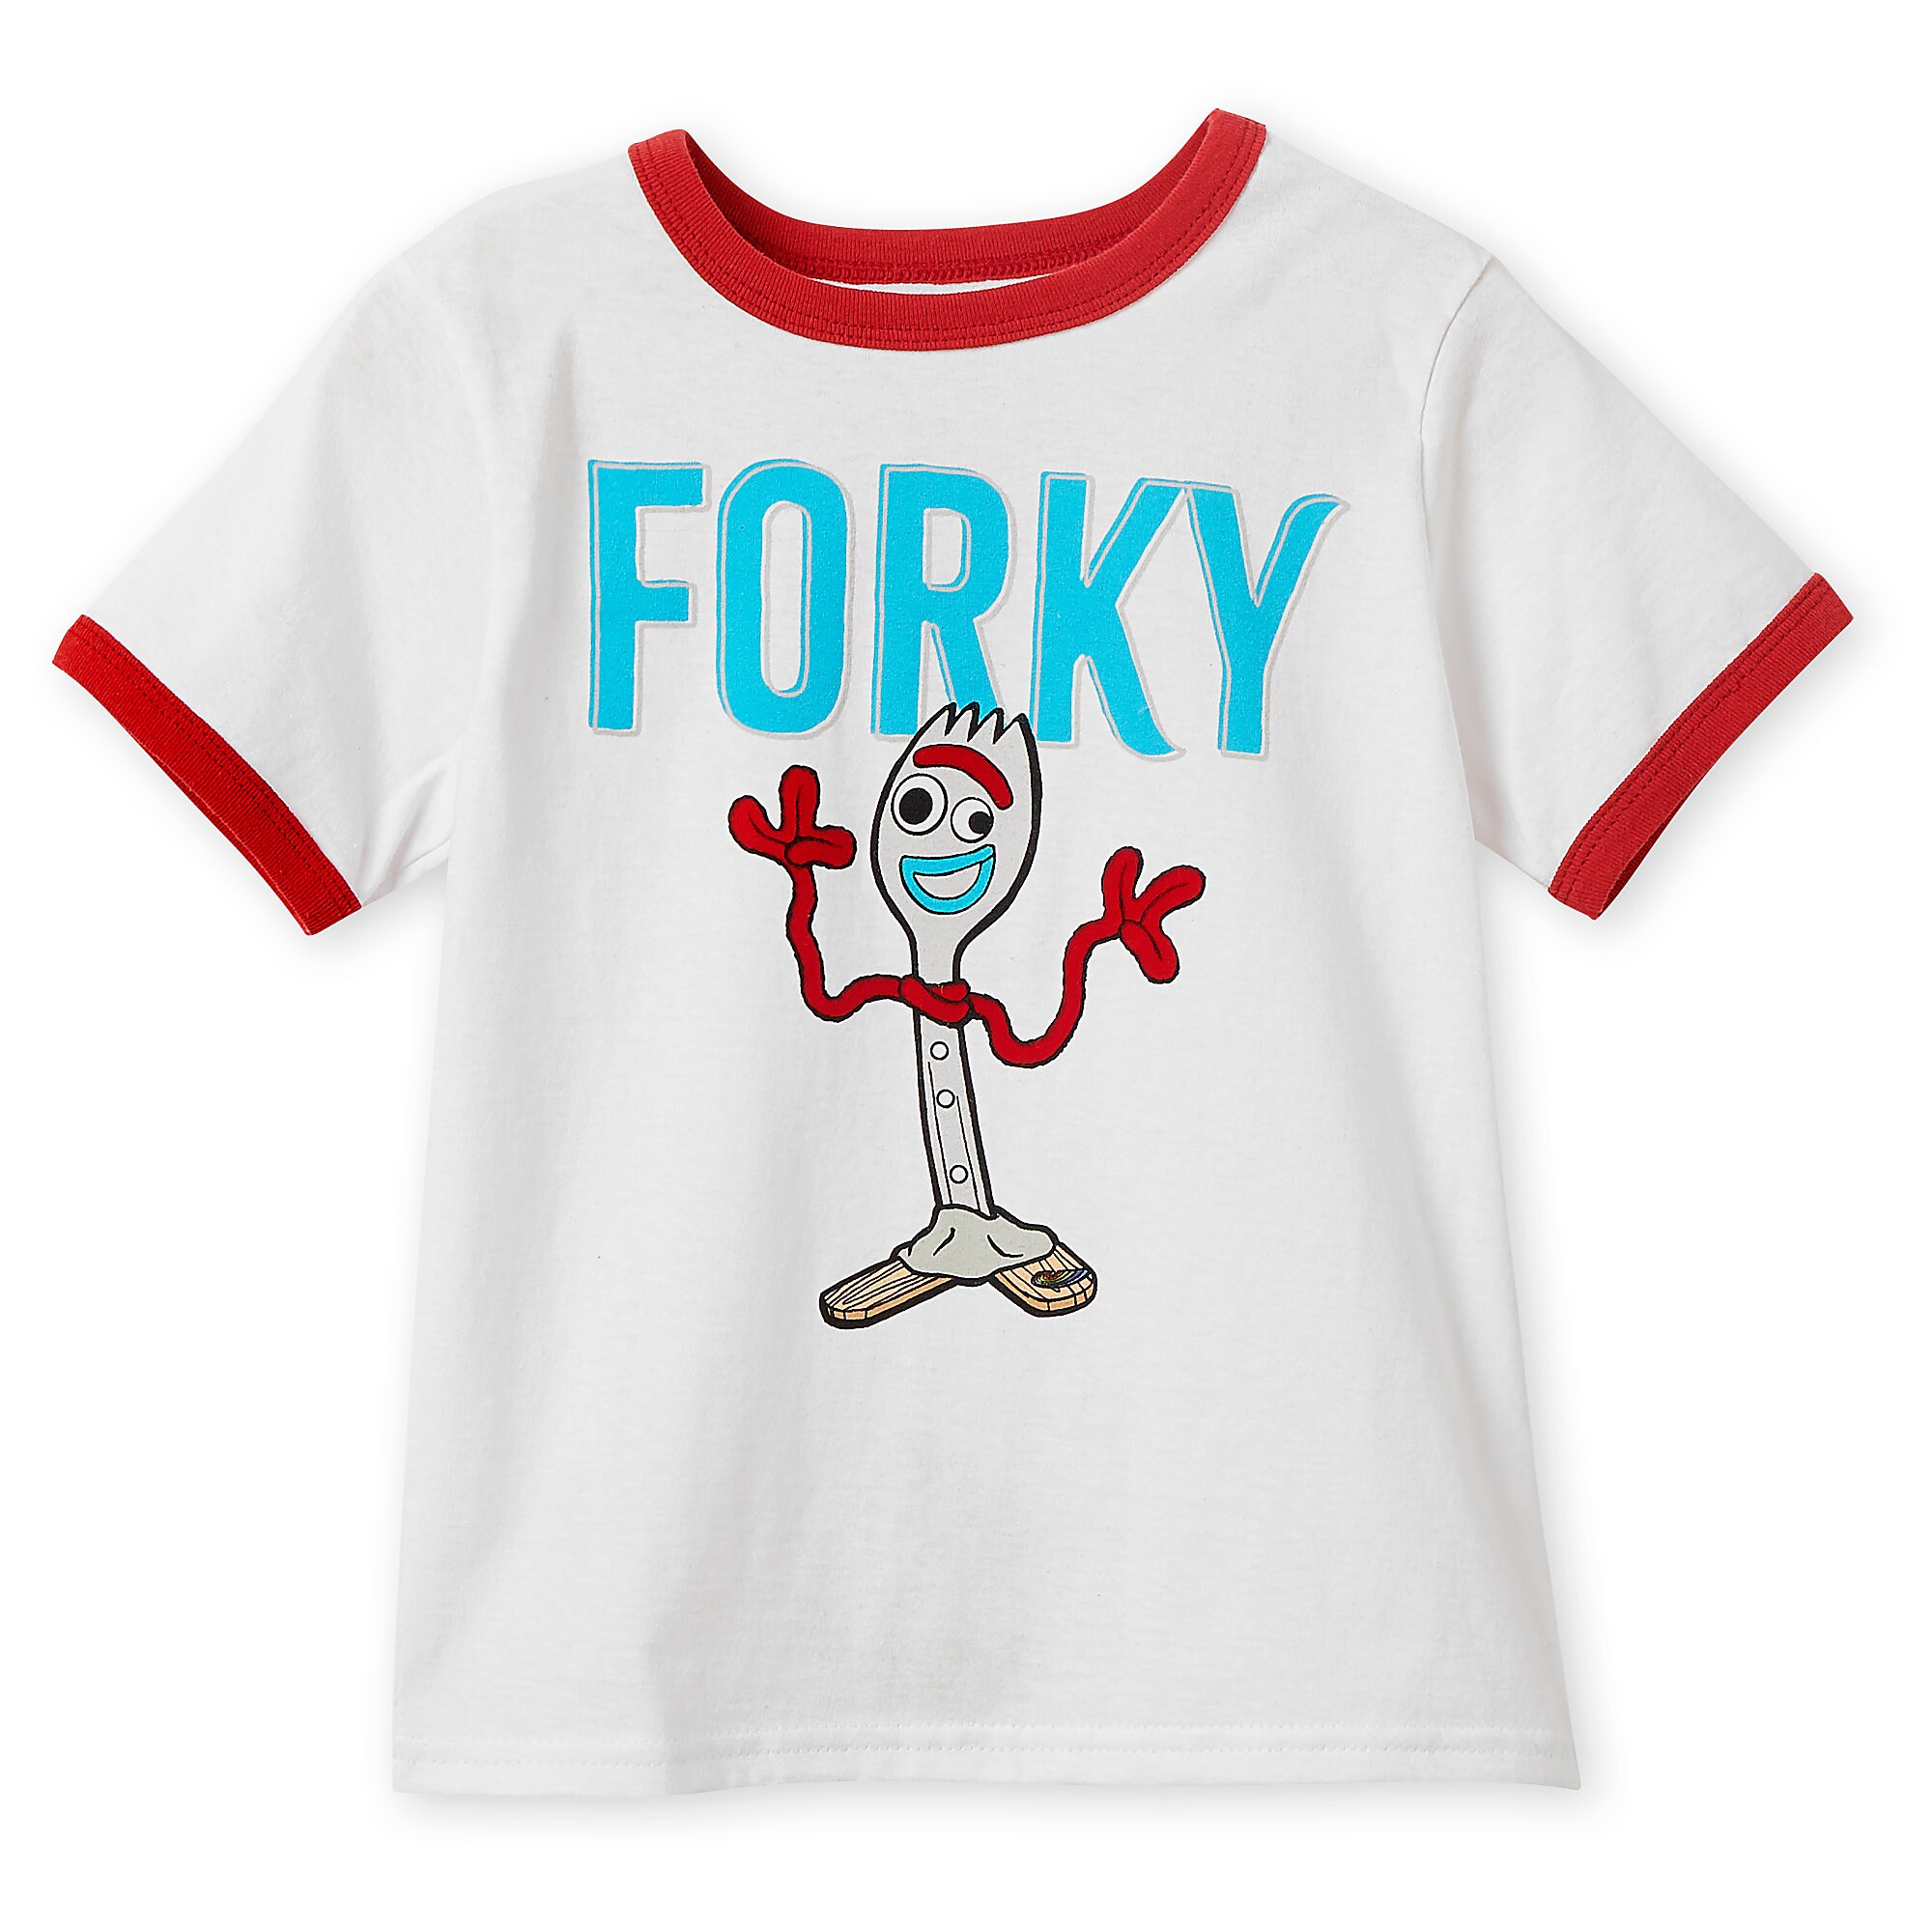 Forky Ringer T-Shirt for Kids - Toy Story 4